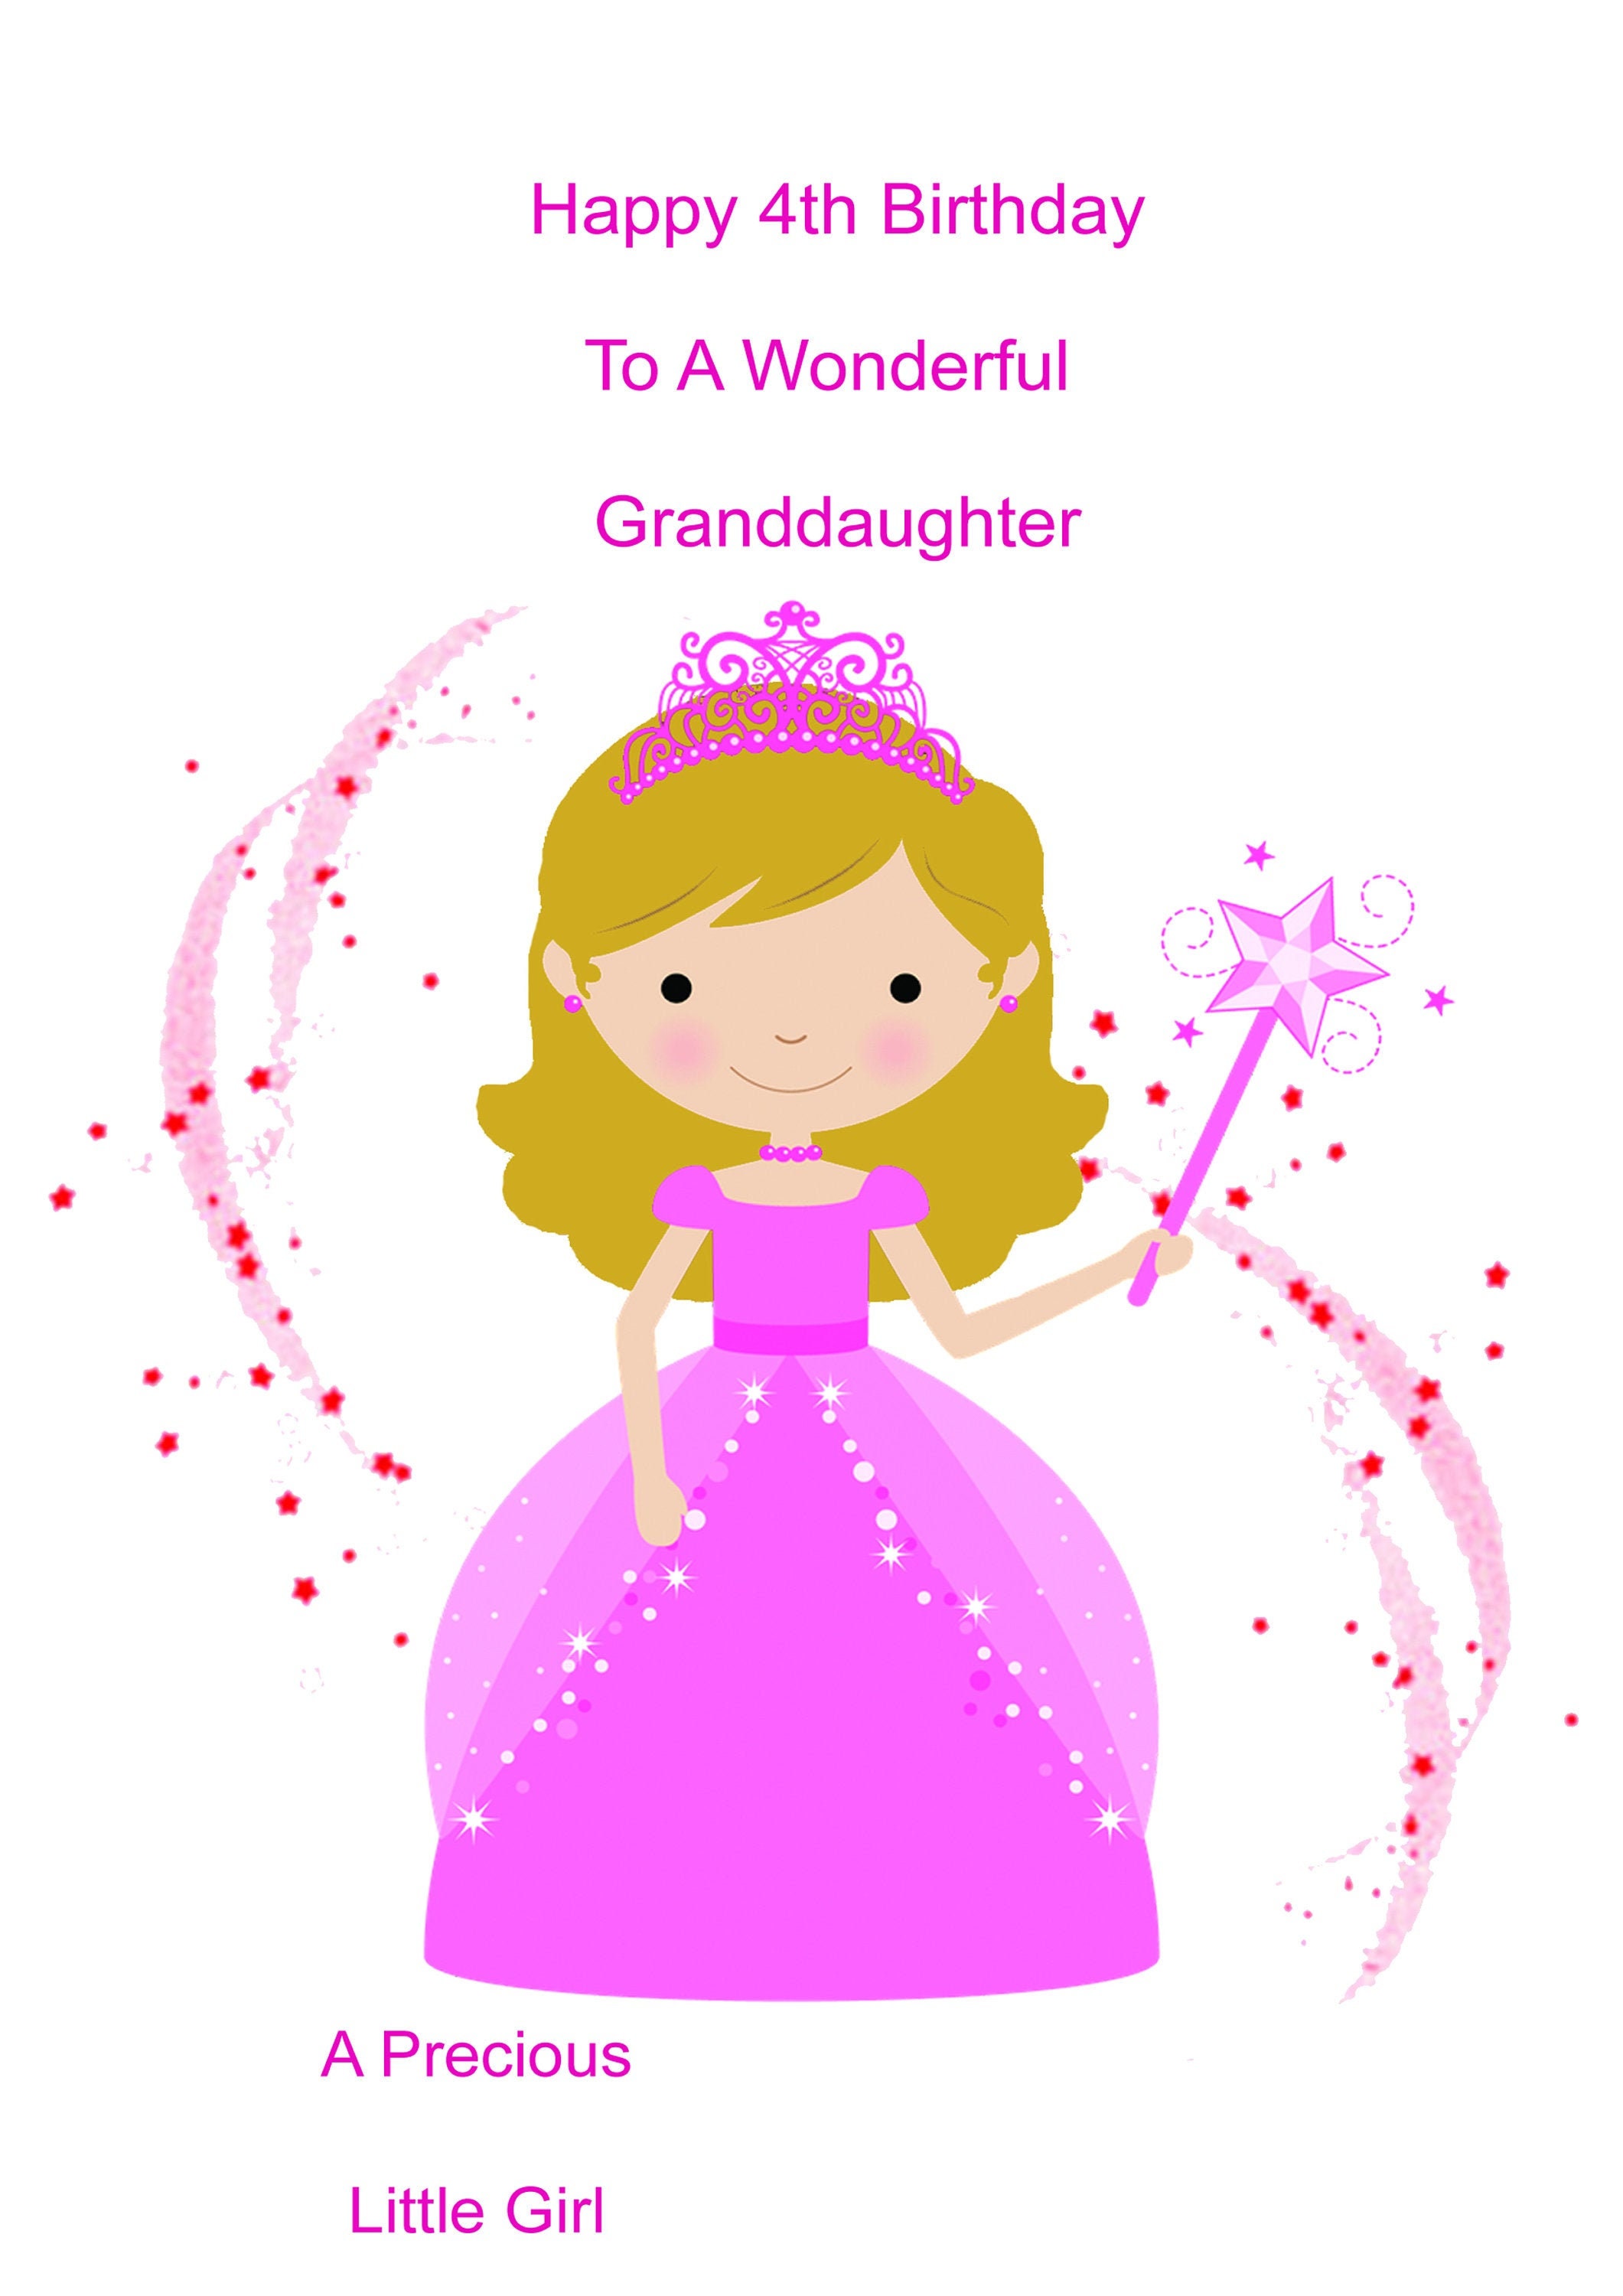 Granddaughter 4th Birthday Card | Etsy